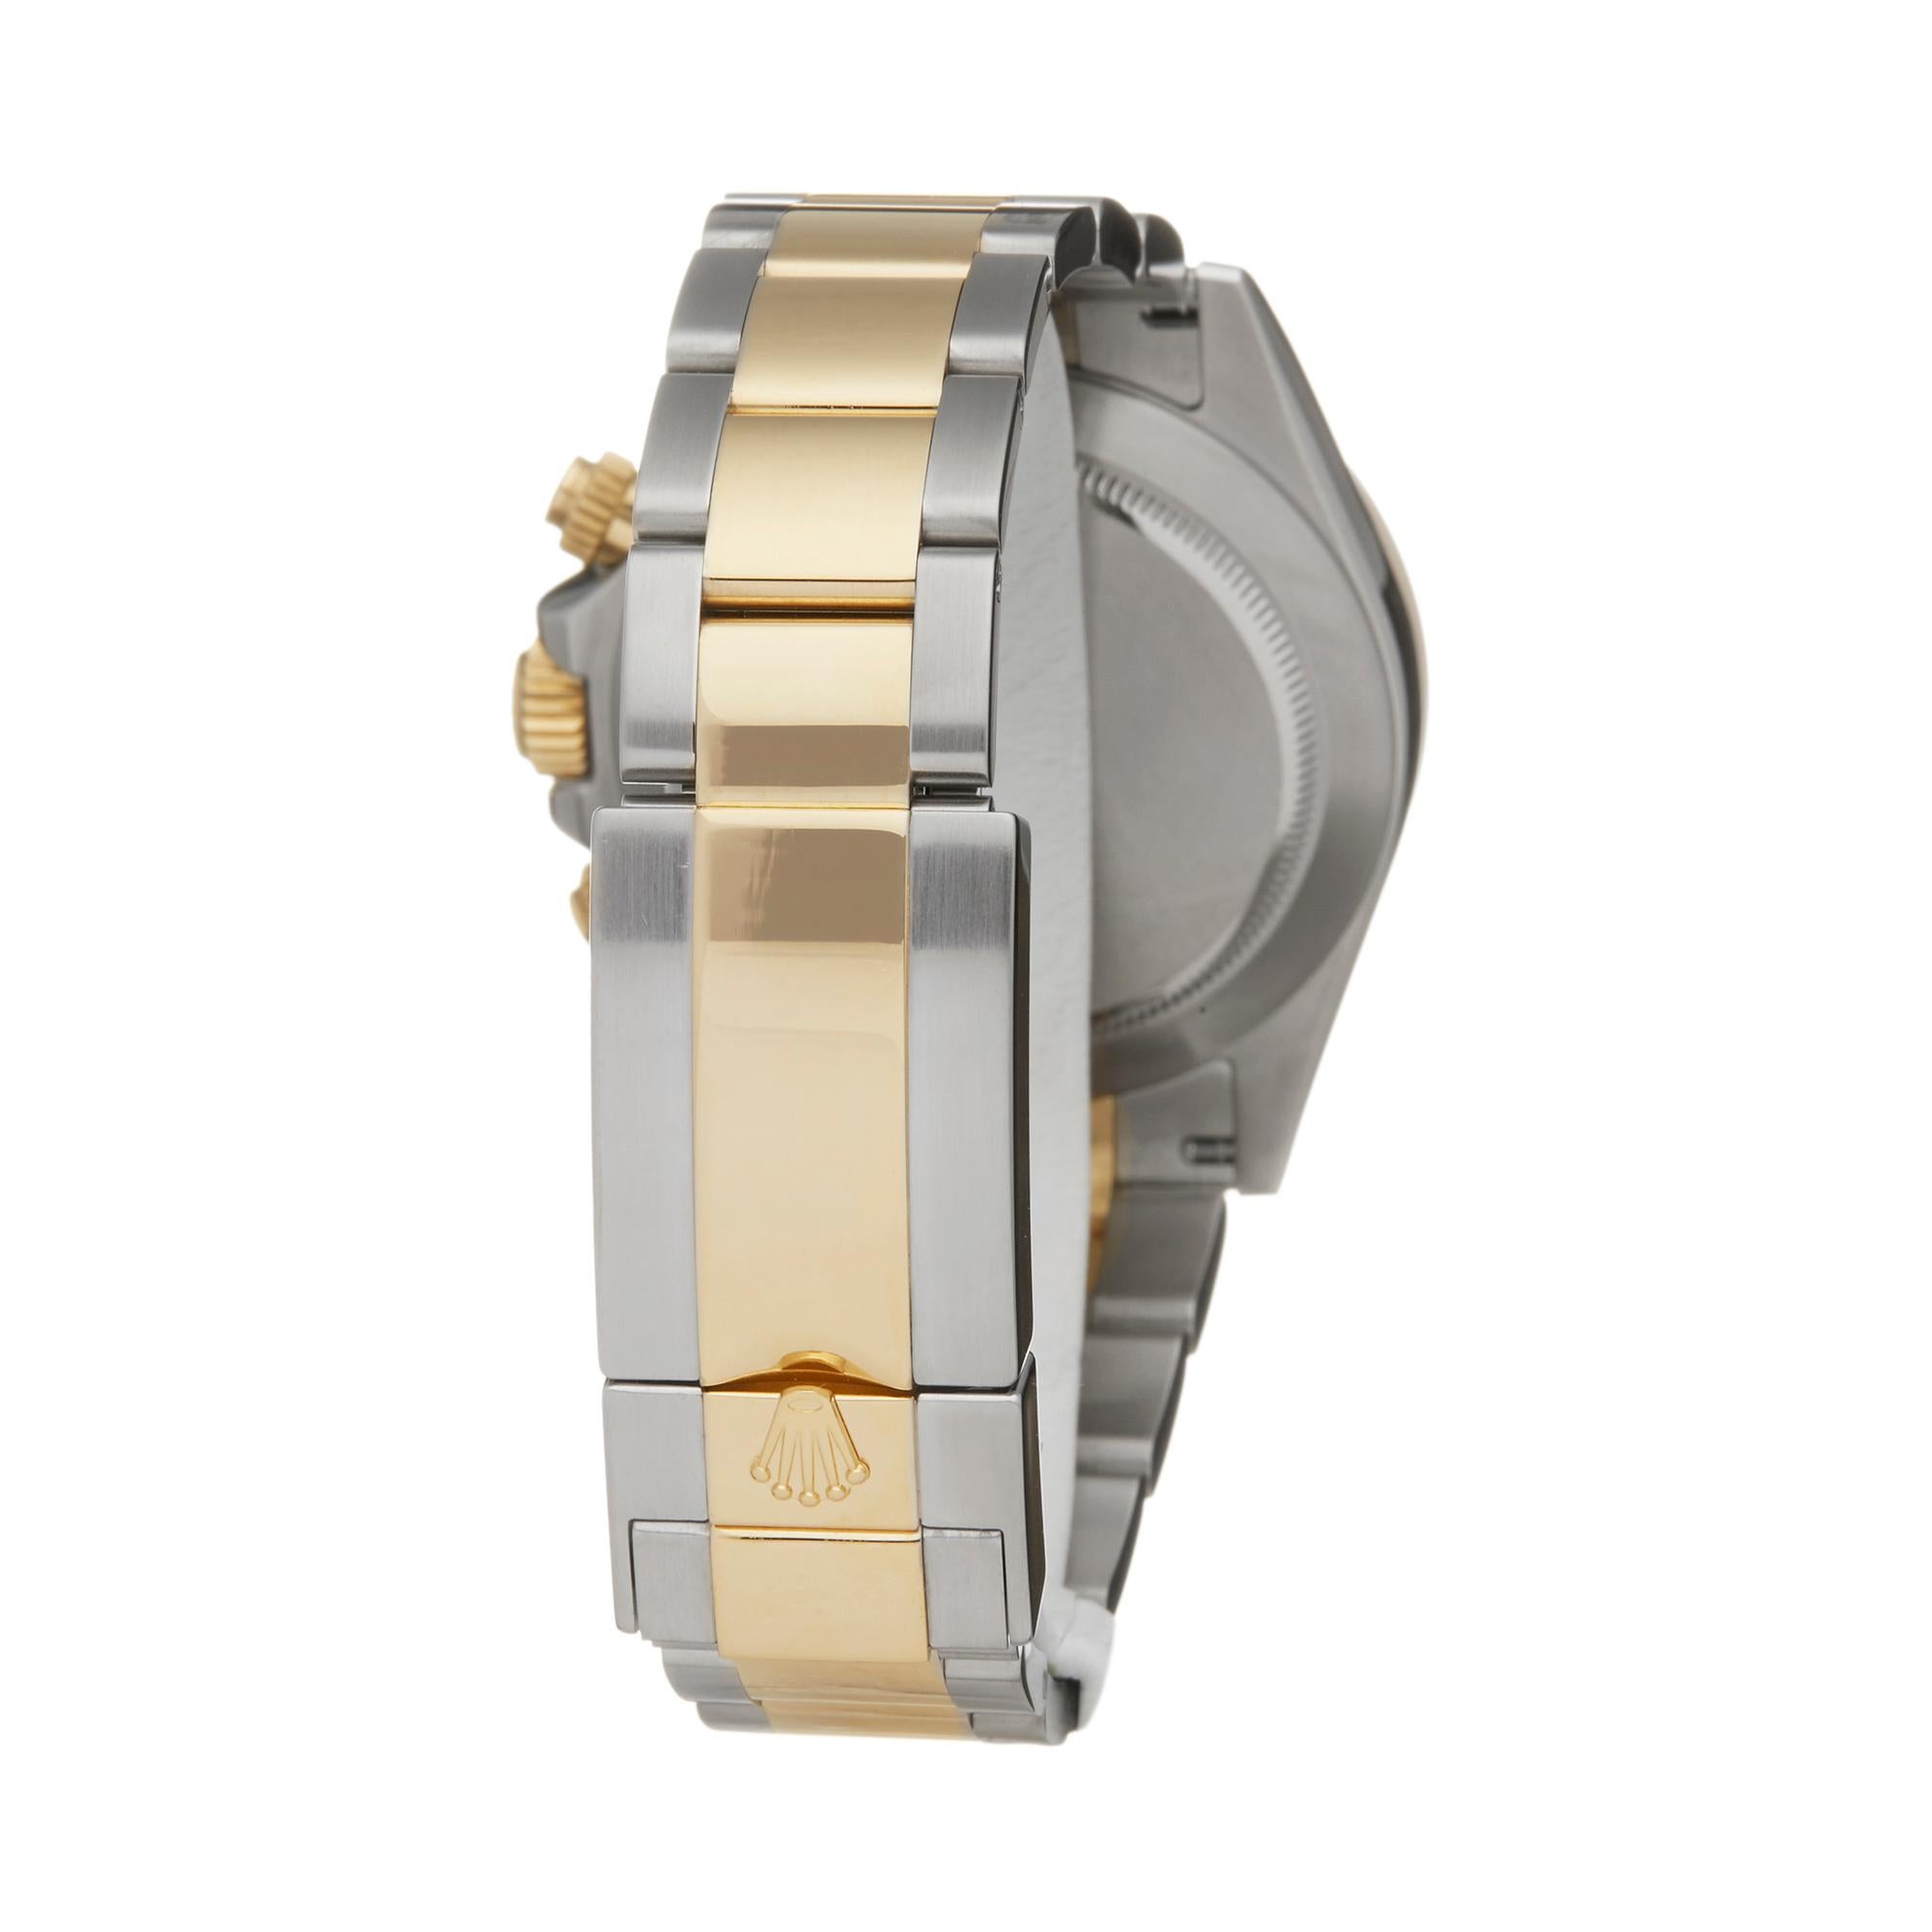 Rolex Daytona Stainless Steel and 18K Yellow Gold 116523 Wristwatch 1